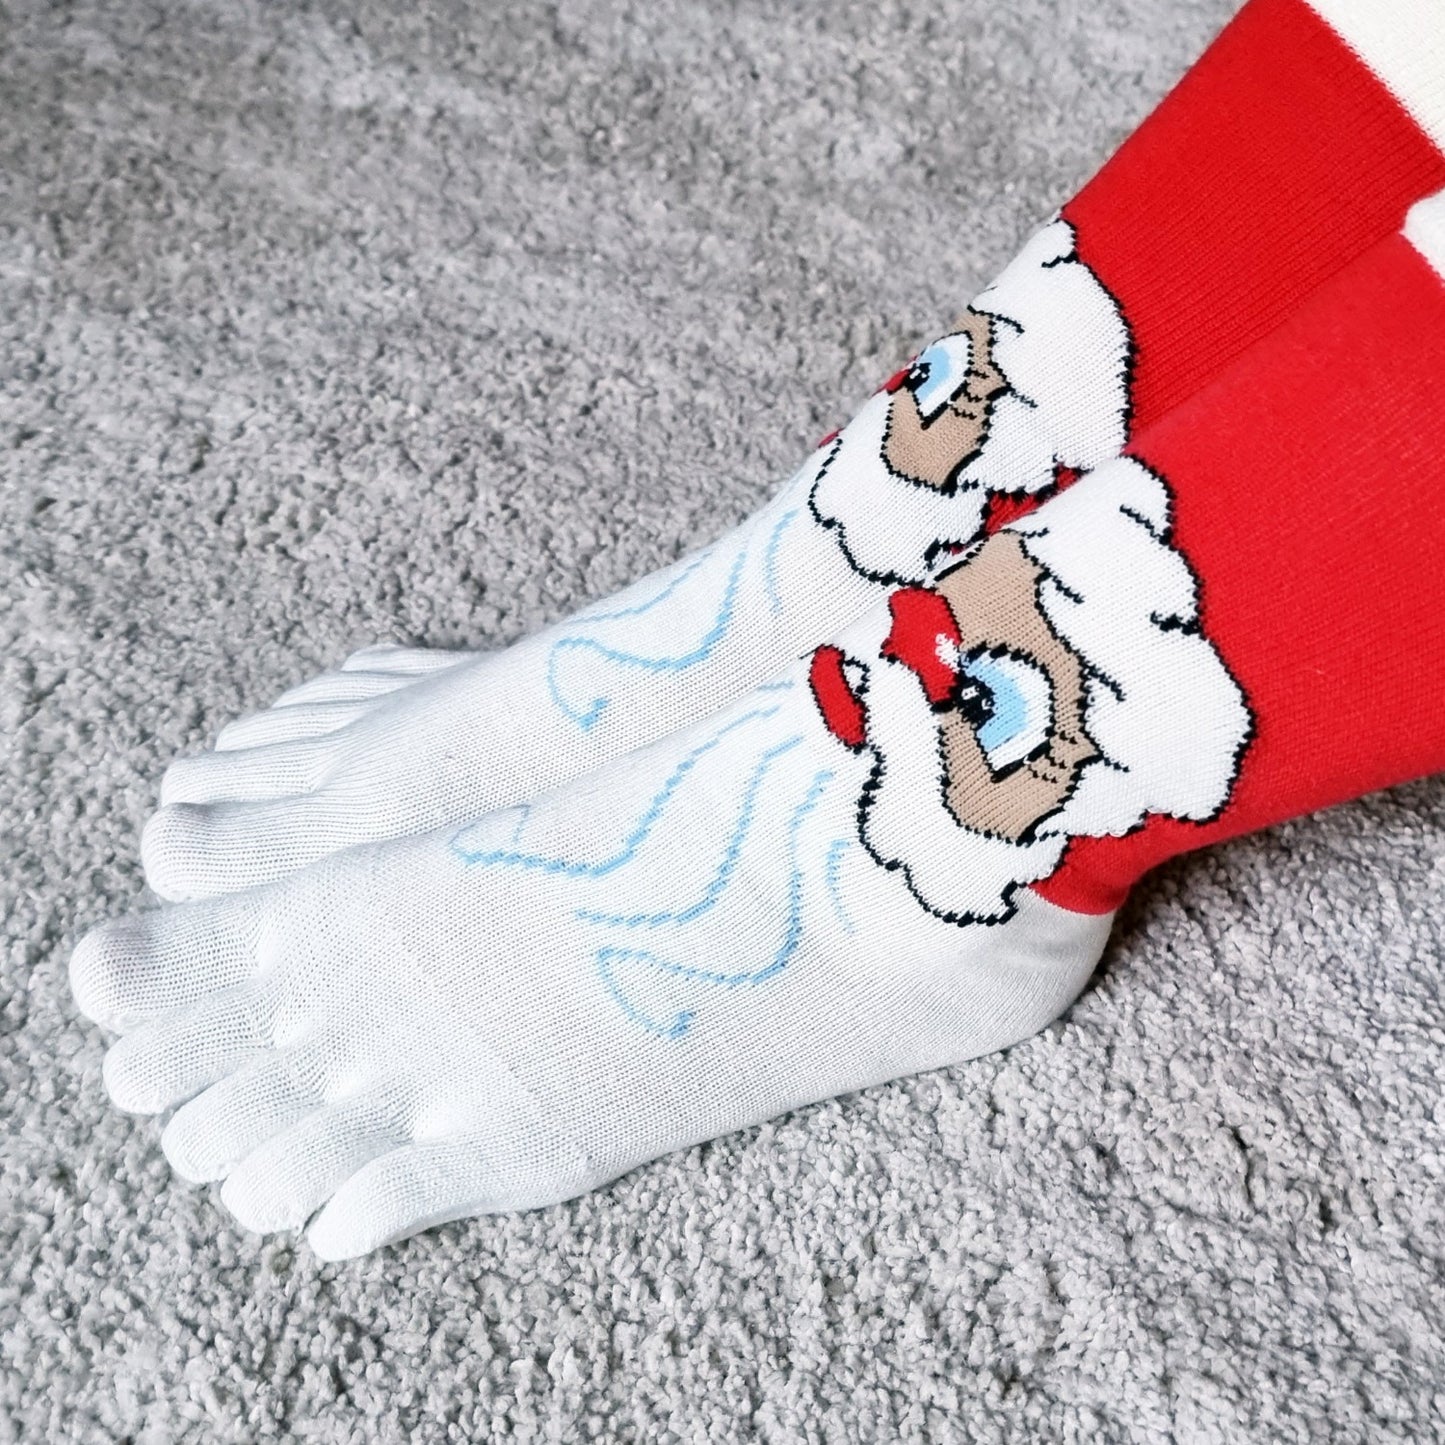 "Santa Claus" Split Toe Christmas Socks